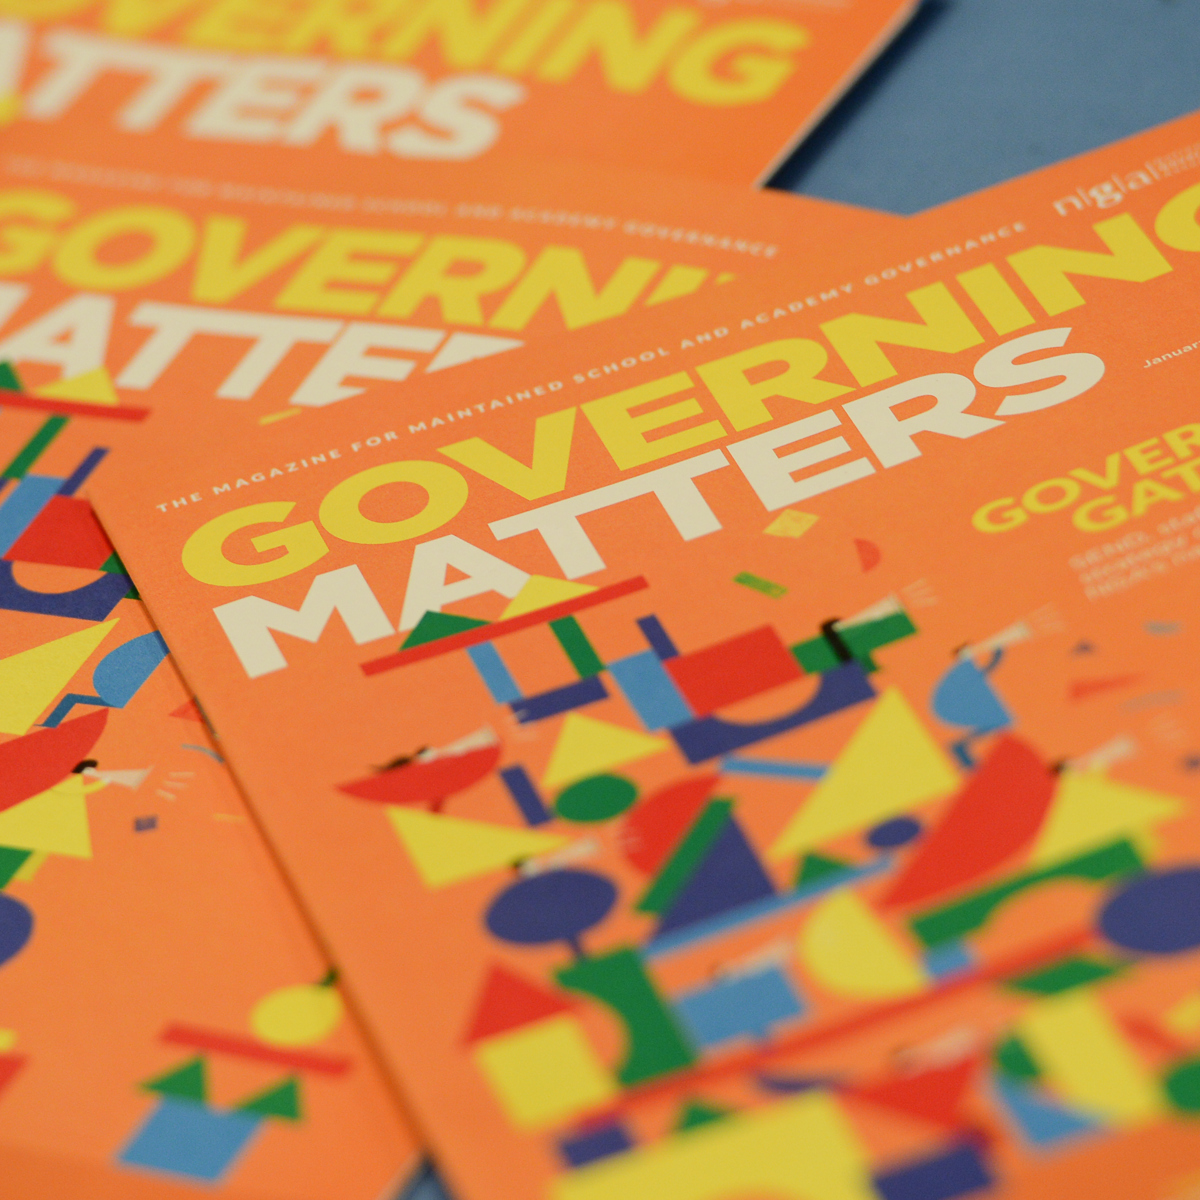 Governing Matters brochure 2020